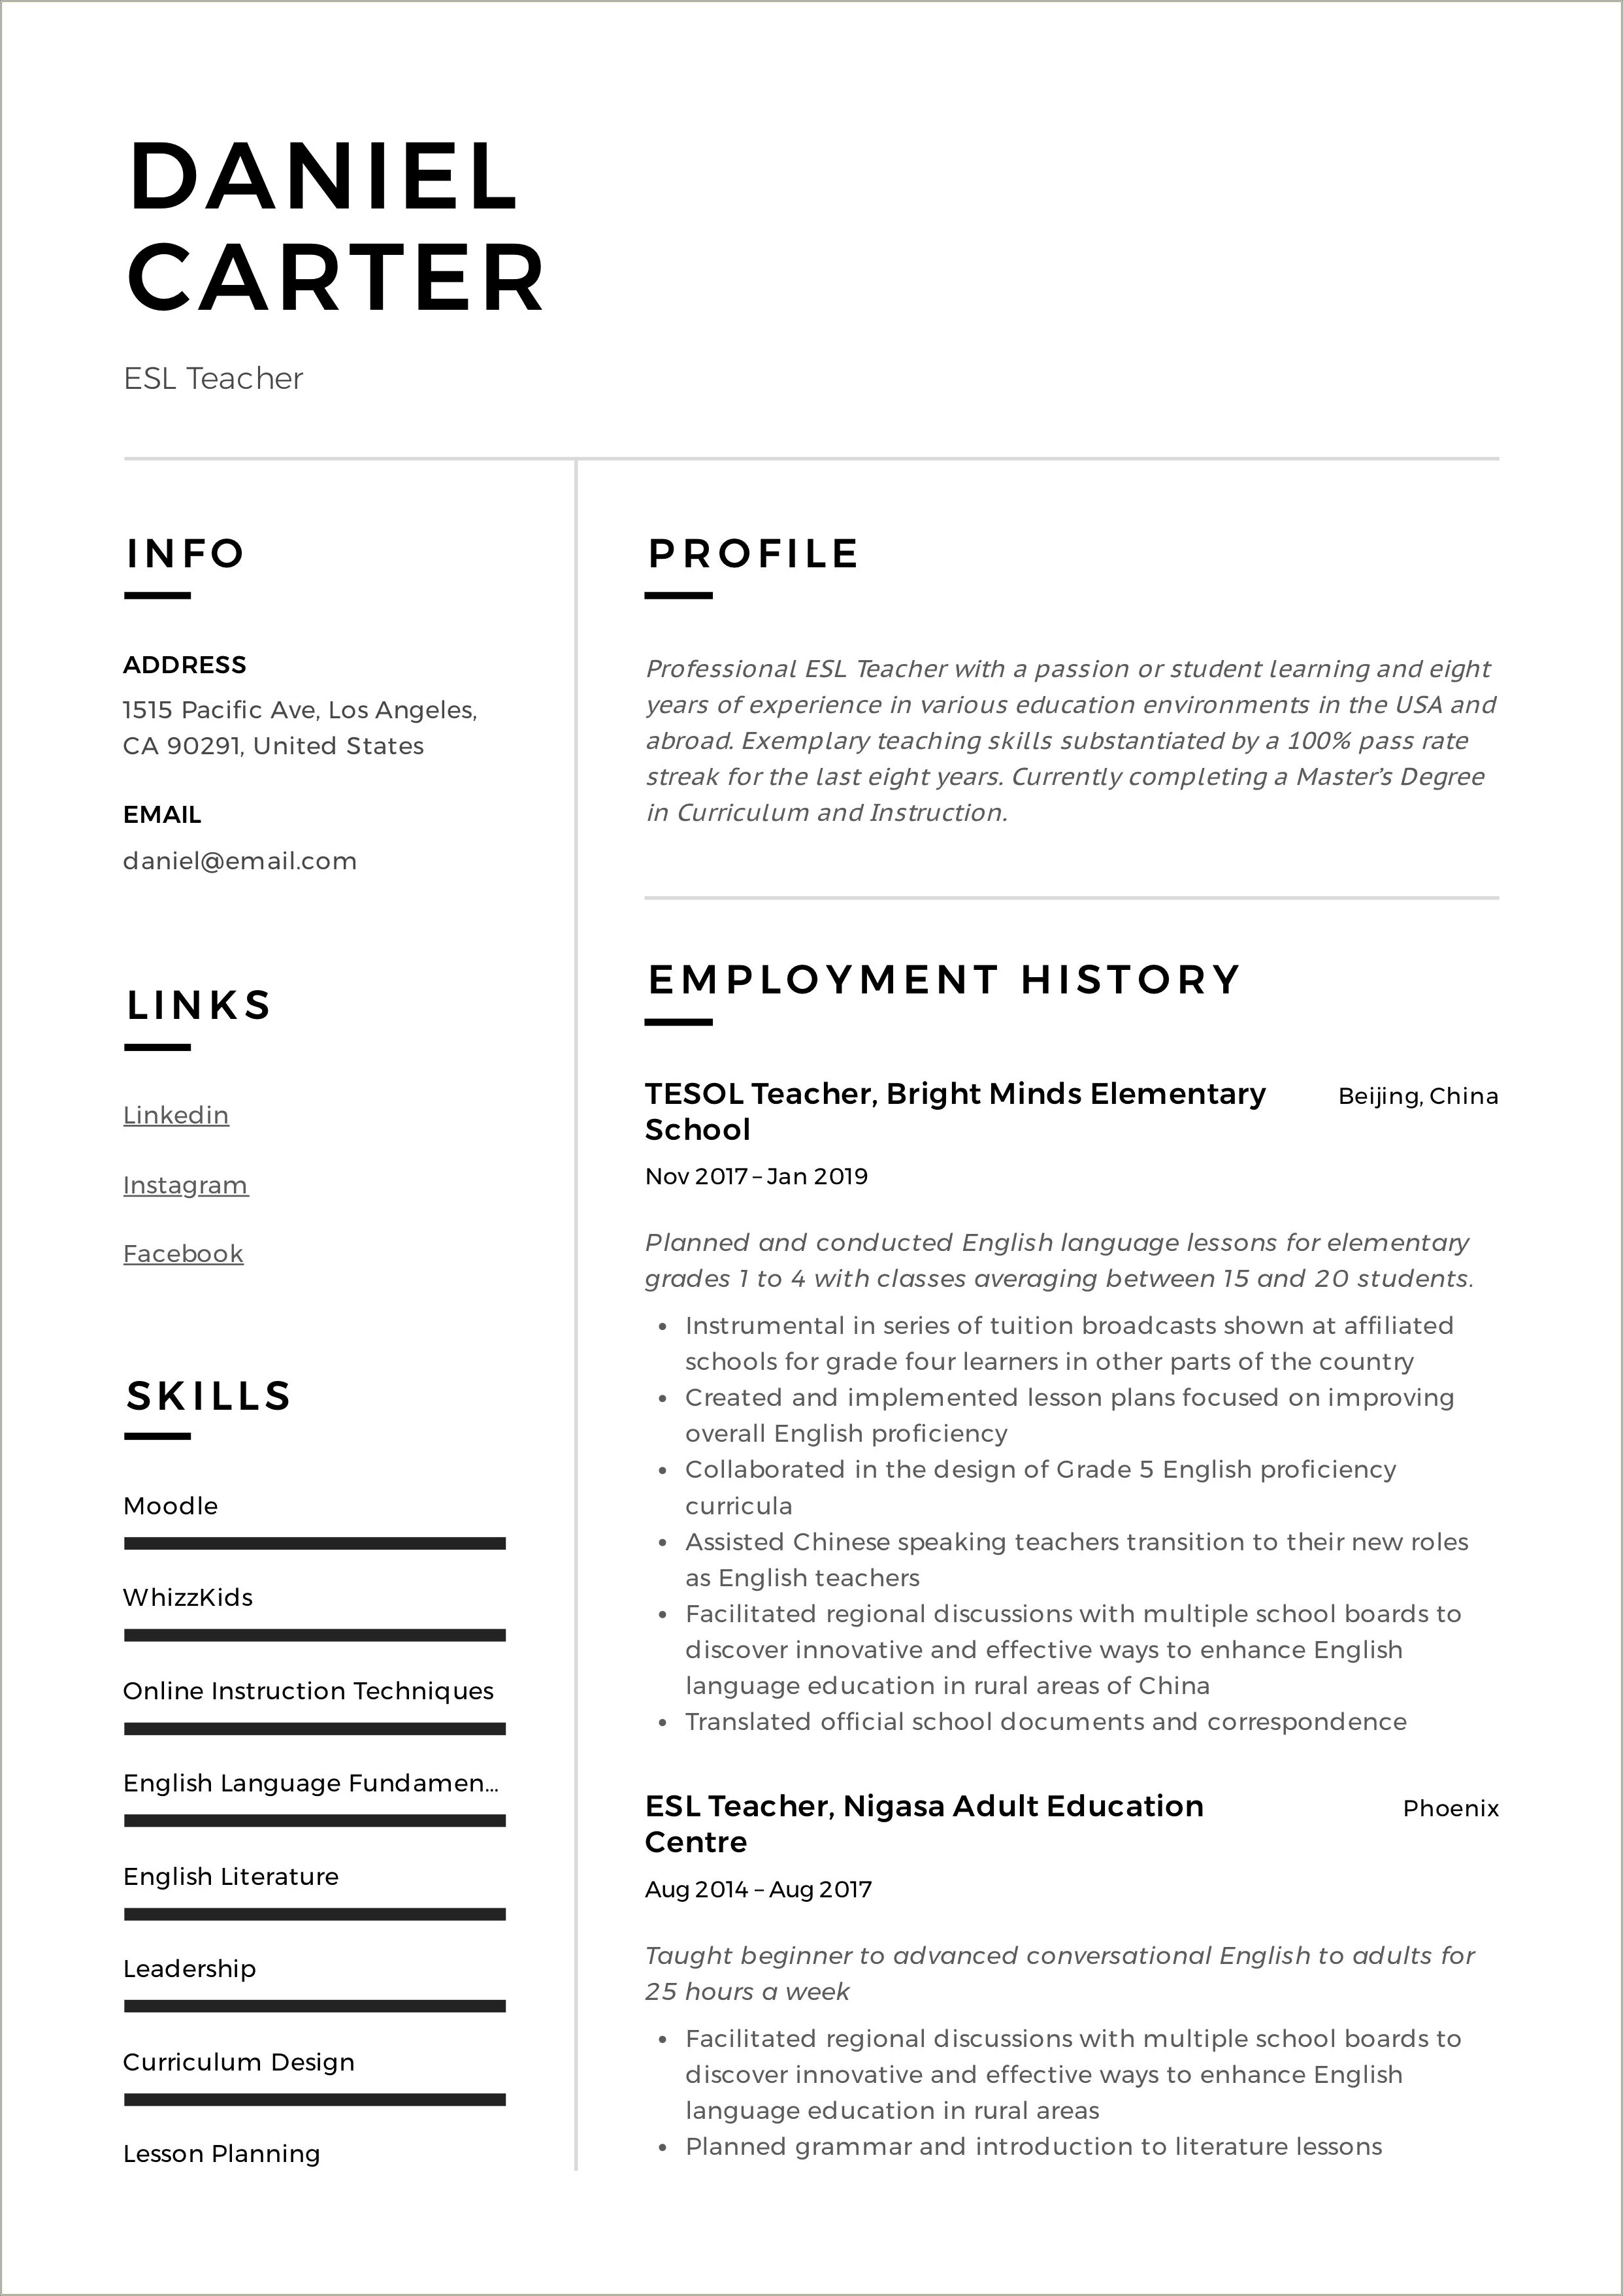 Carter's Job Description For Resume